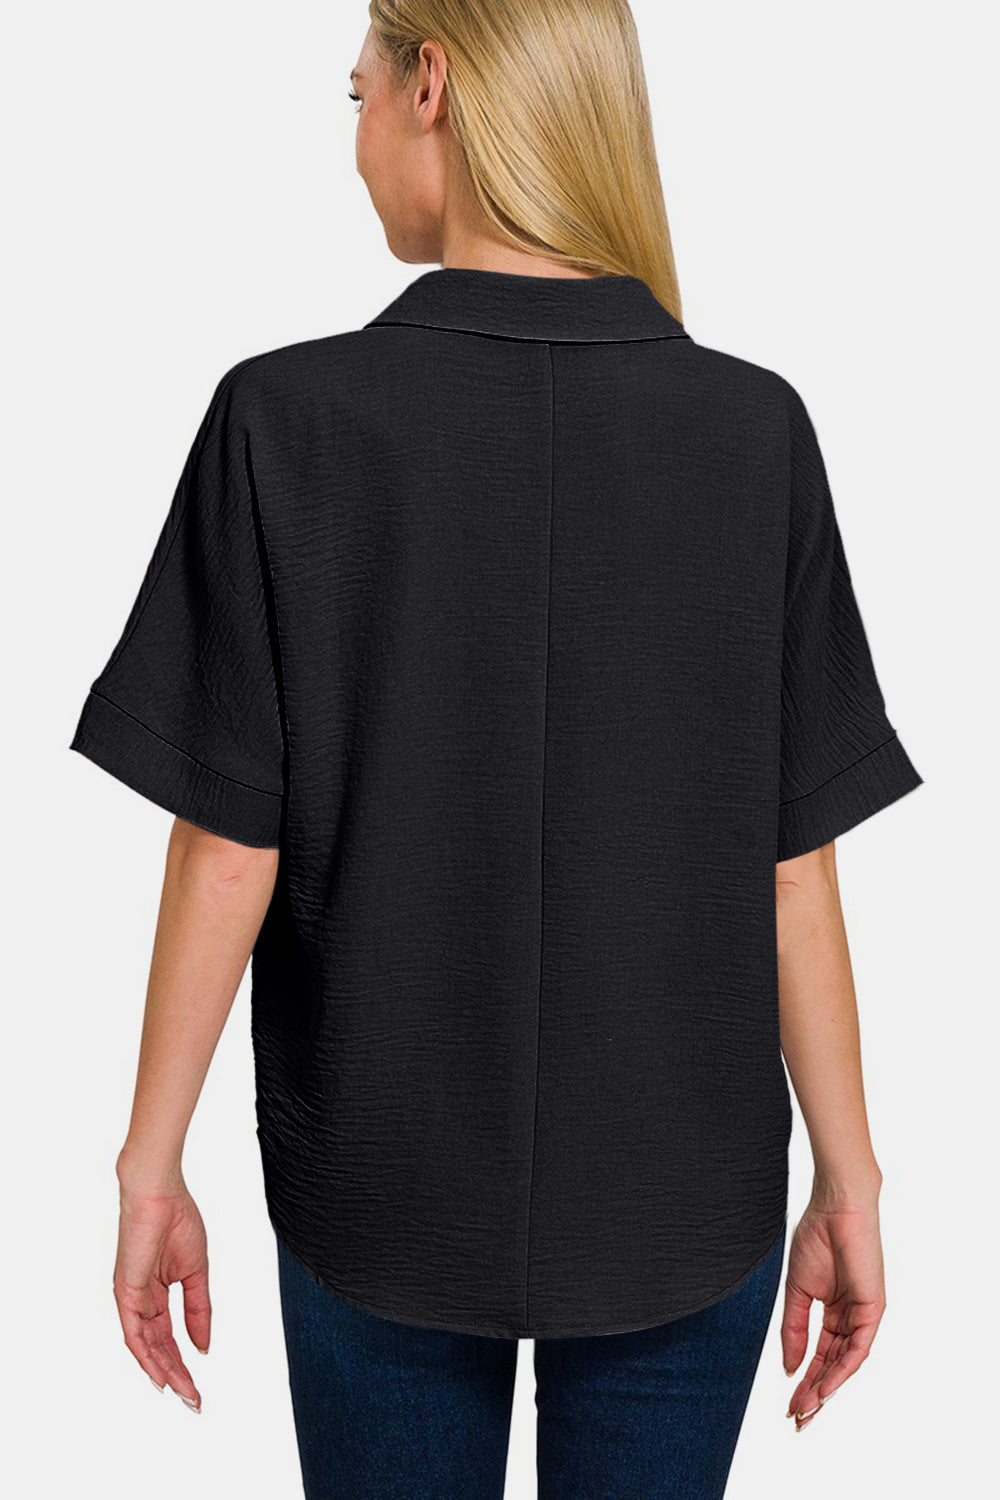 Black Texture Collared Neck Shirt (S - 3X)